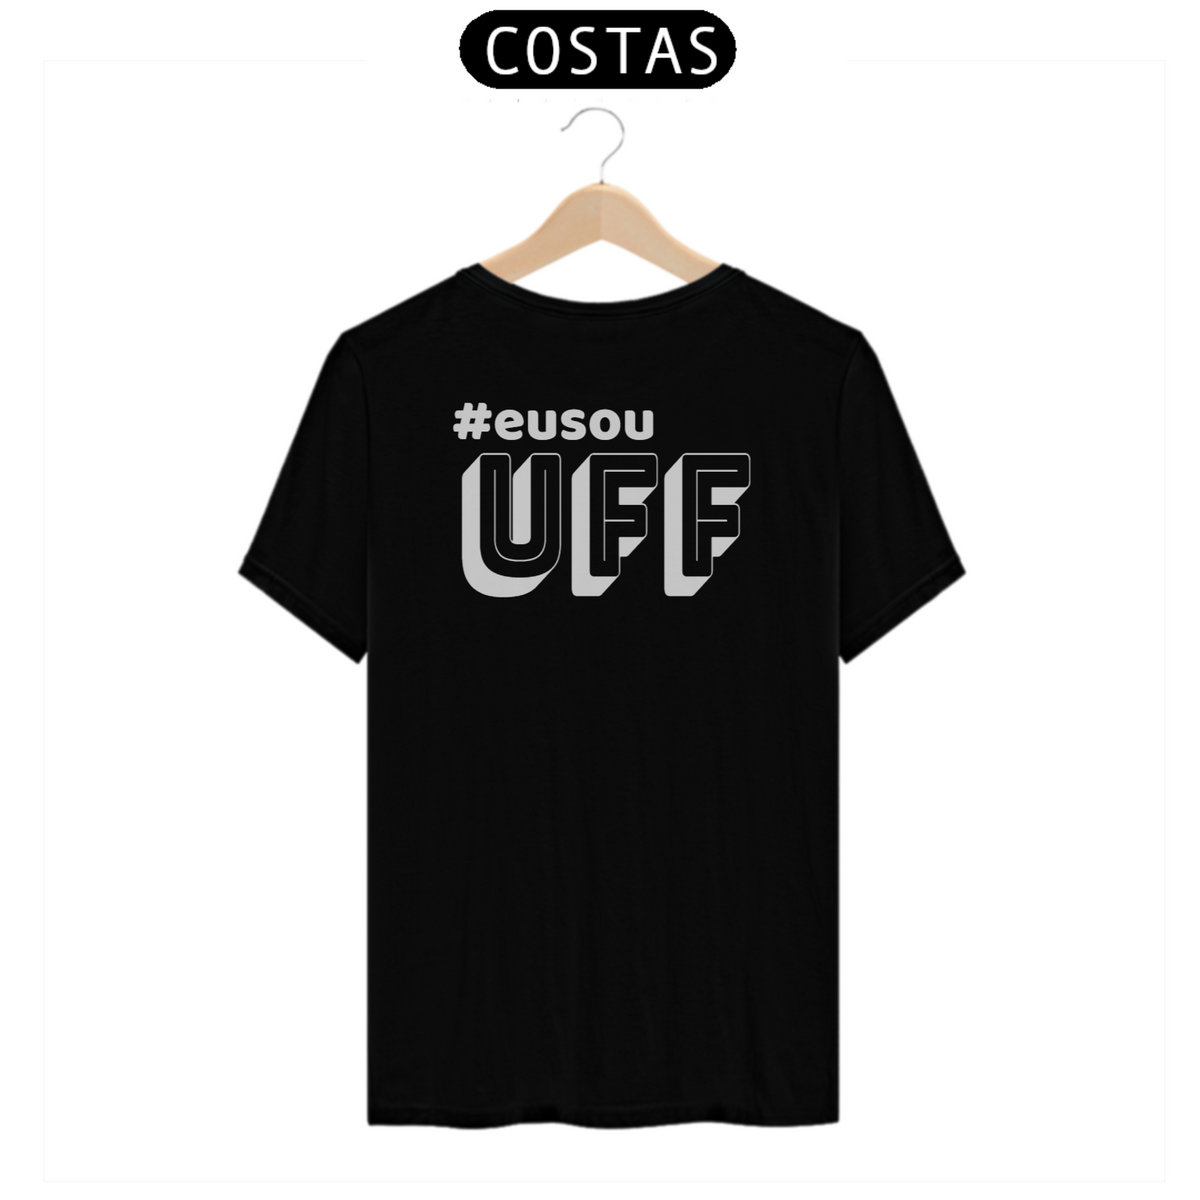 Nome do produto: Camiseta [UFF] {cores diversas} -costas - #eusouuff